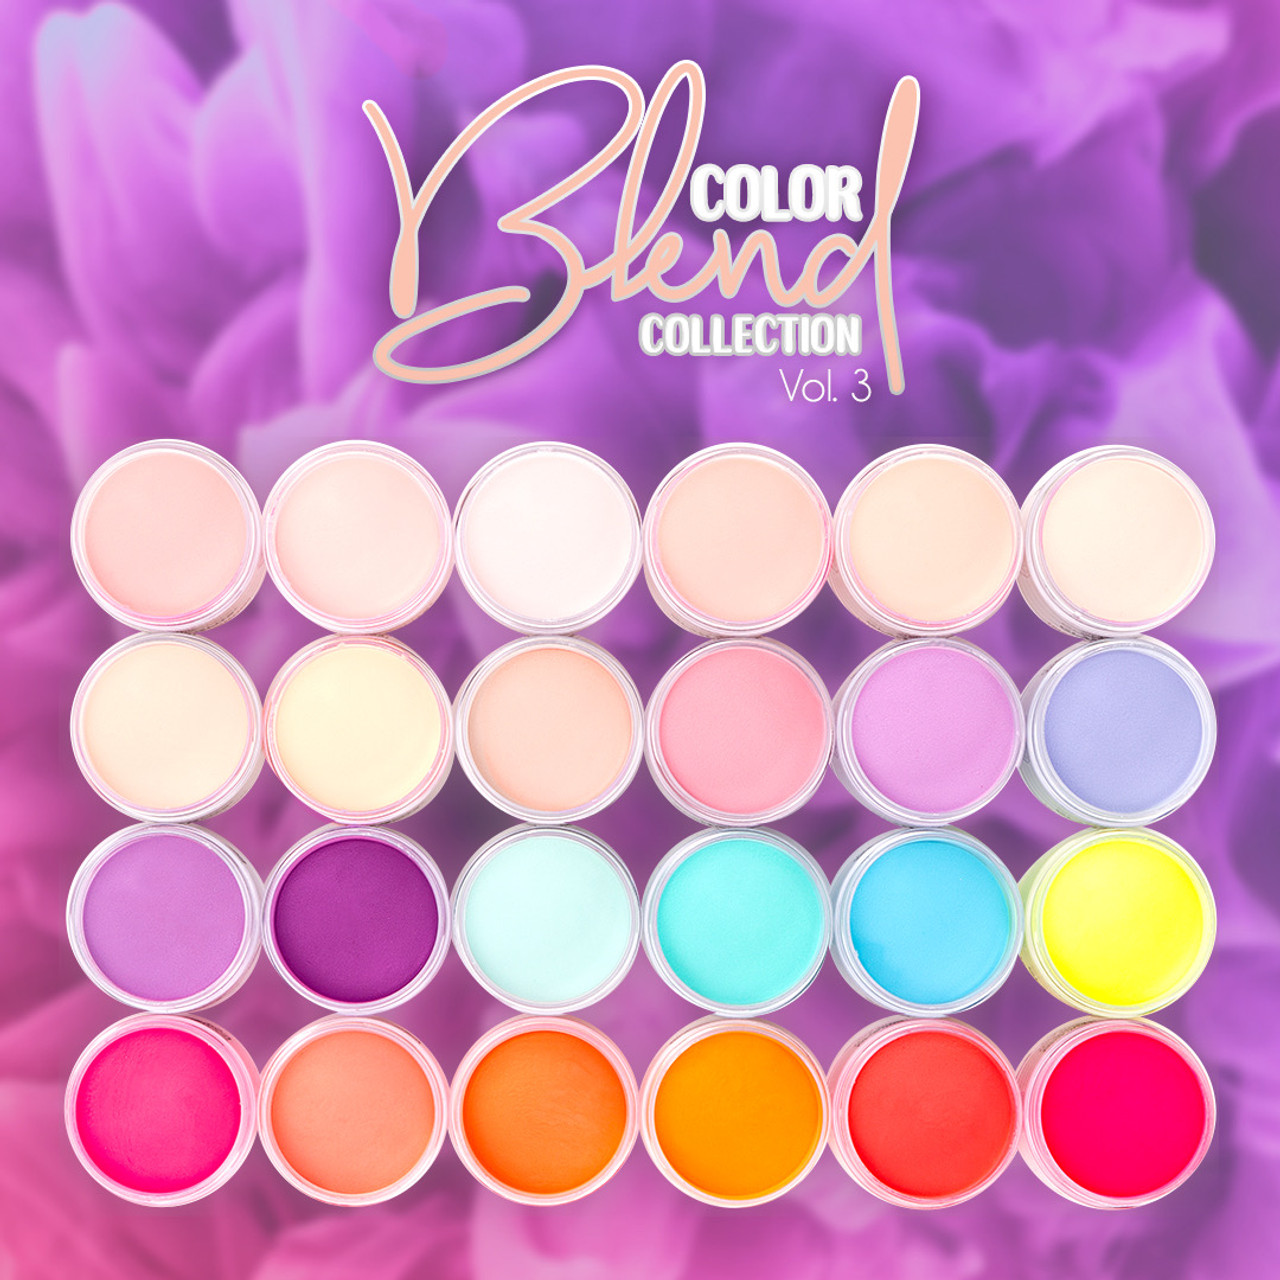 Glam & Glits Acrylic Powder - Color Blend Midnight Glaze 2 oz - BL3047